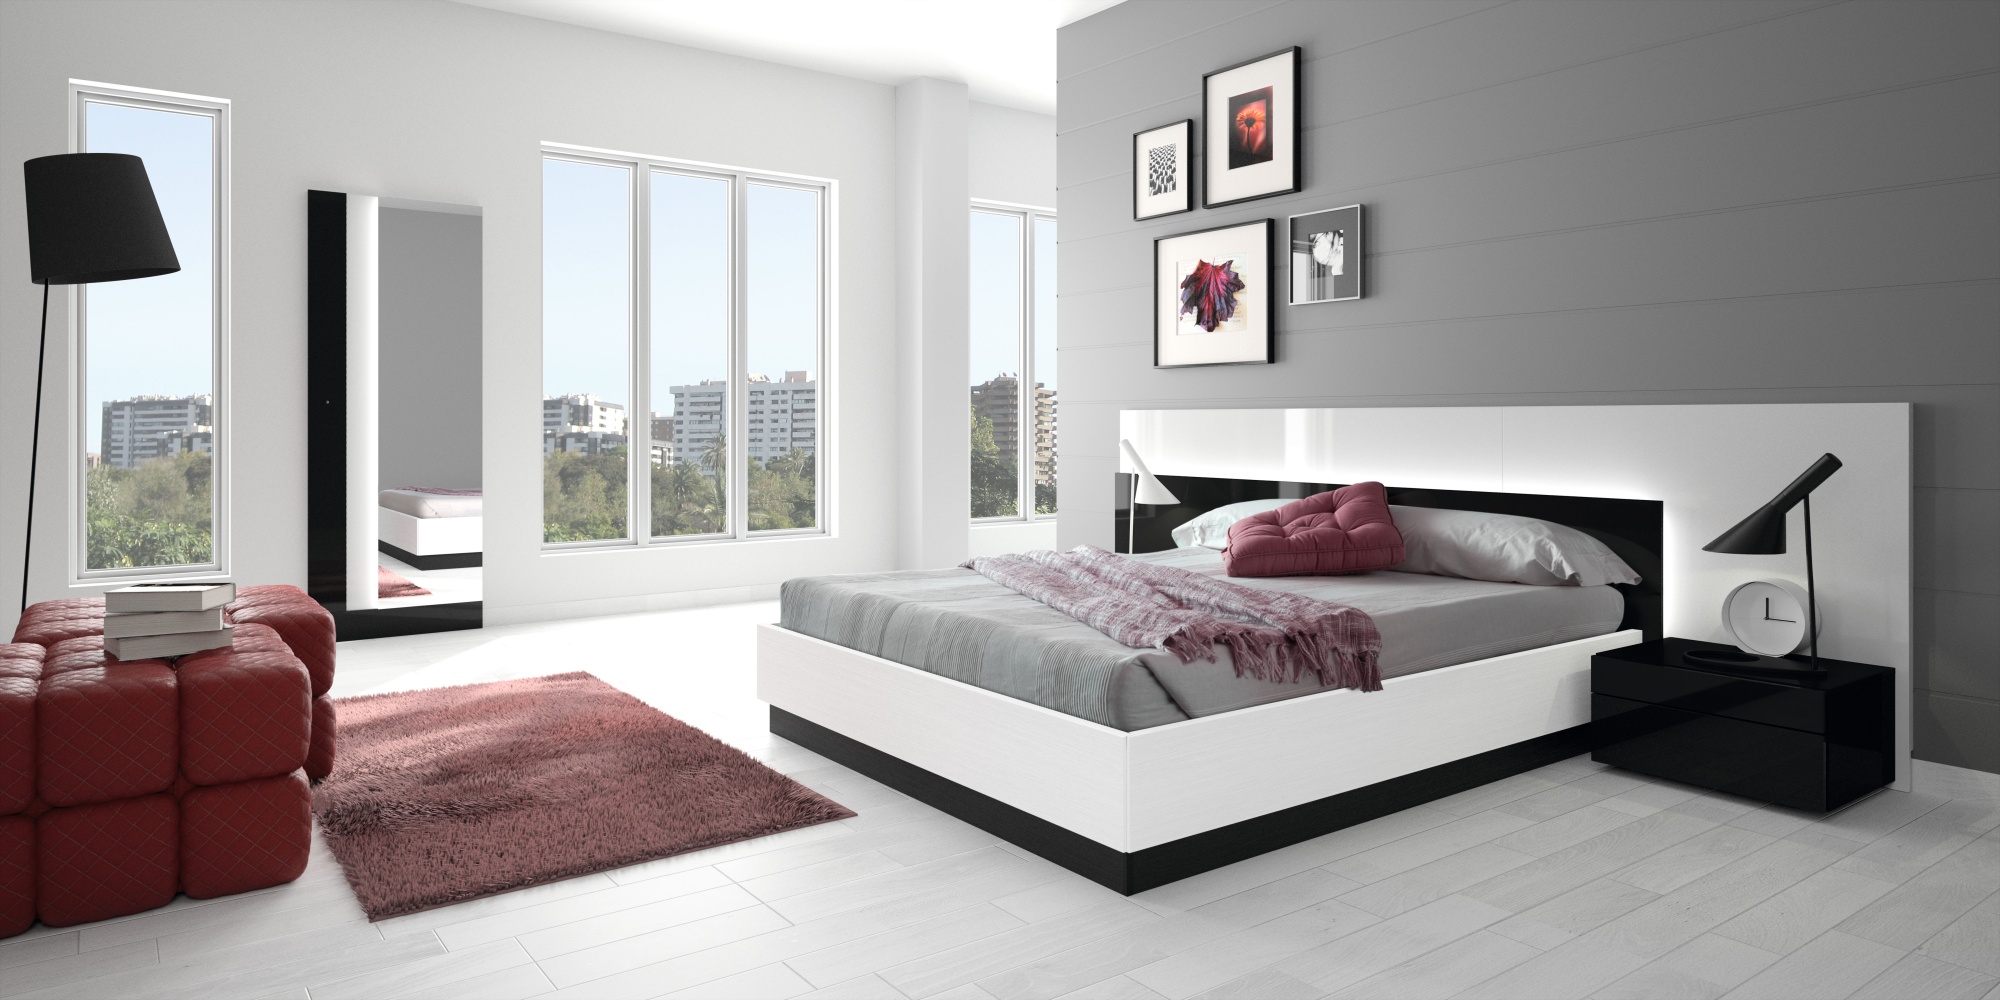 best design of bedroom furniture